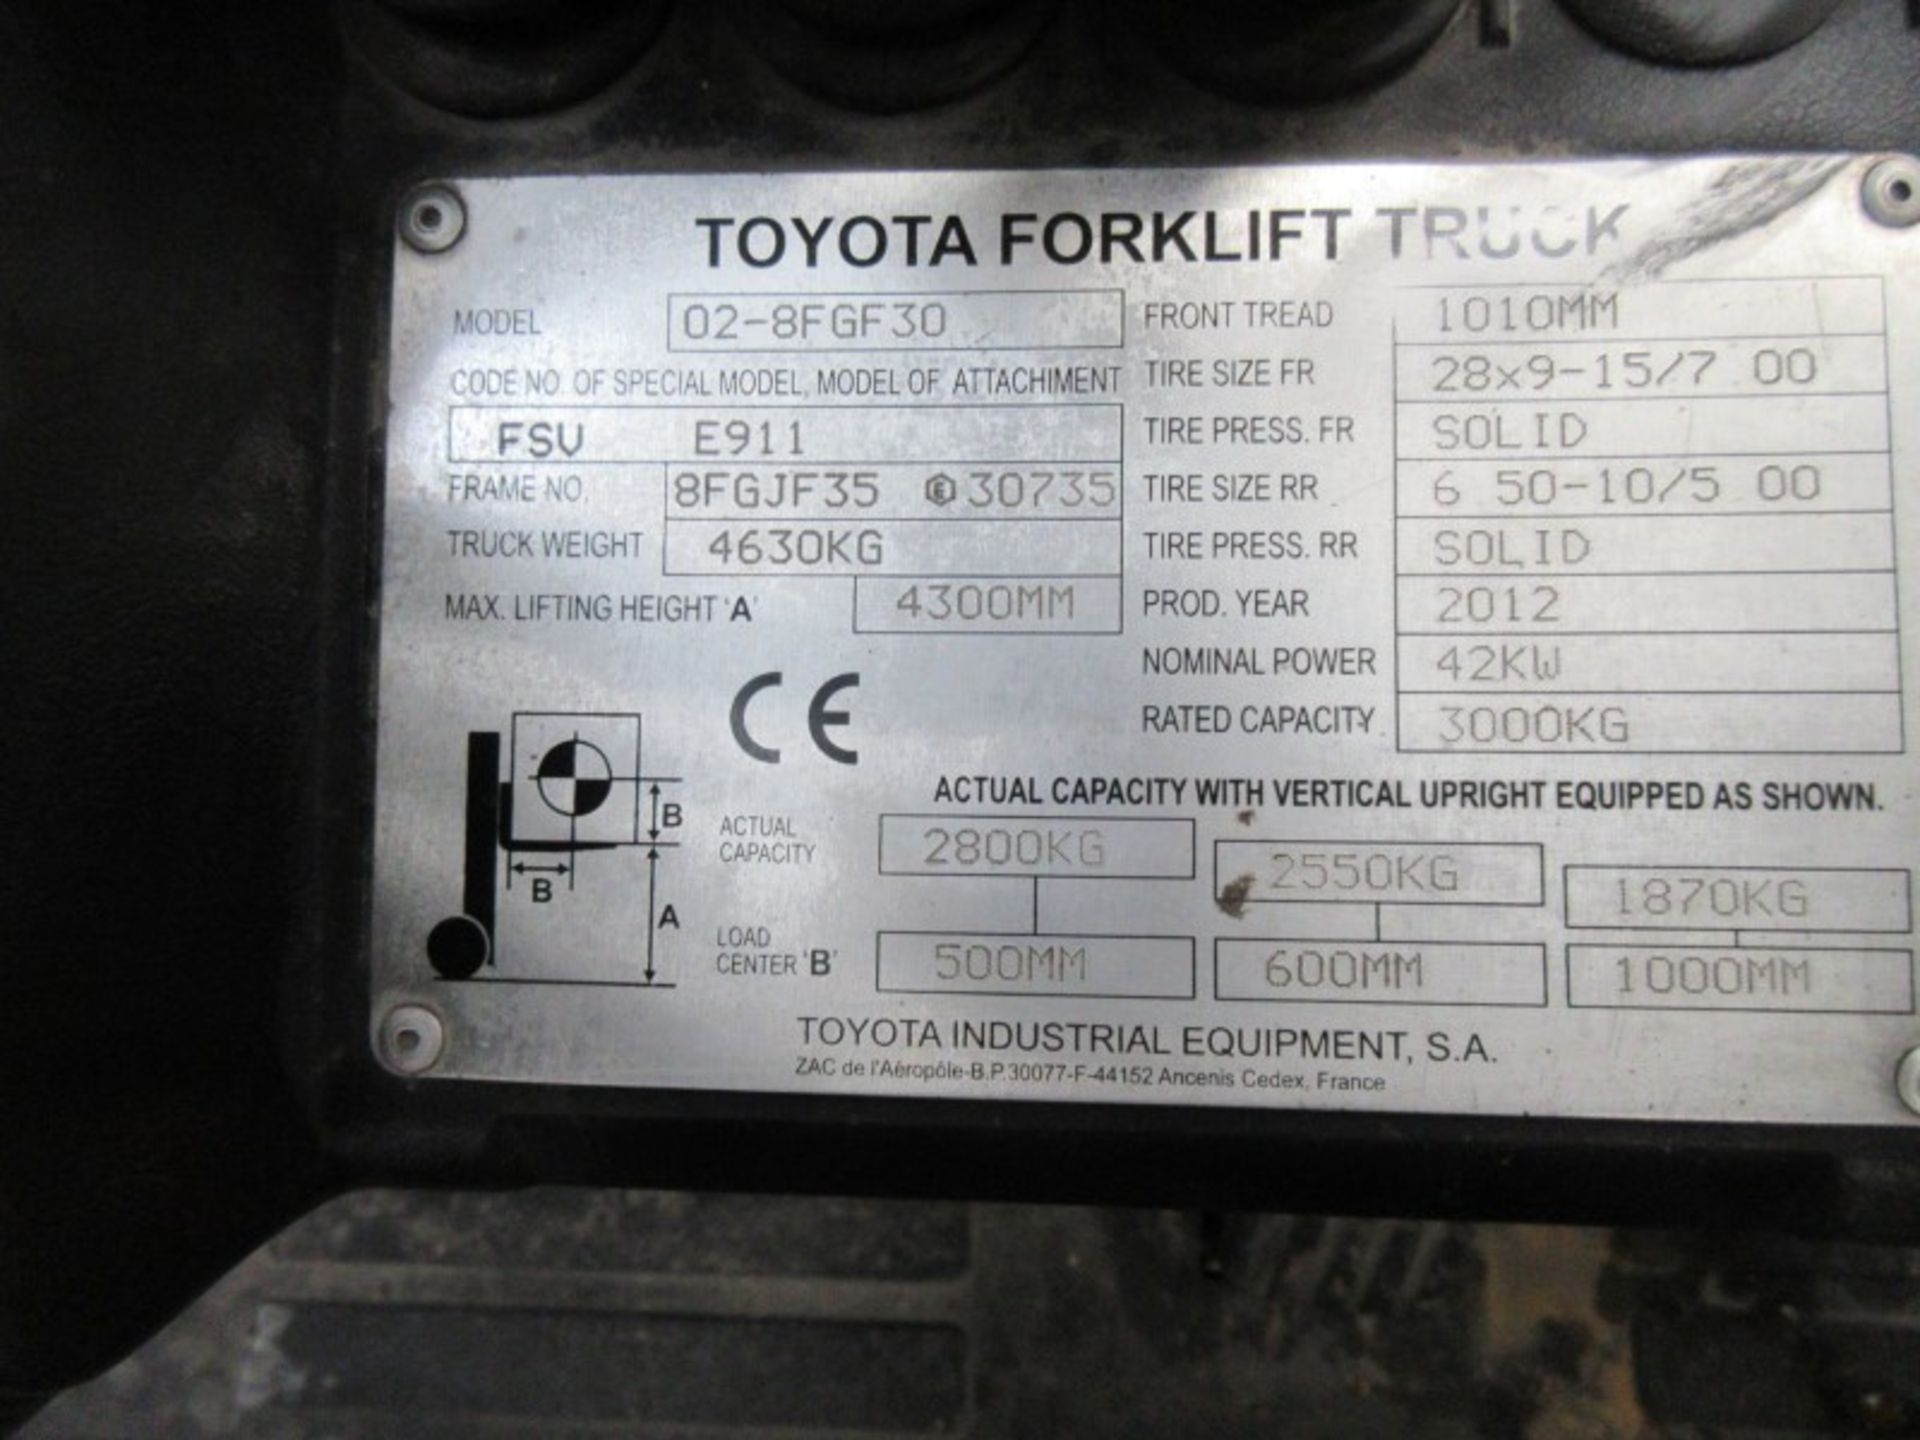 TOYOTA 02-8FGF30 Plant LPG / CNG - VIN: 8FGF35E30735 - Year: 2012 - 8,377 Hours - Triplex 4.3M - Image 9 of 9